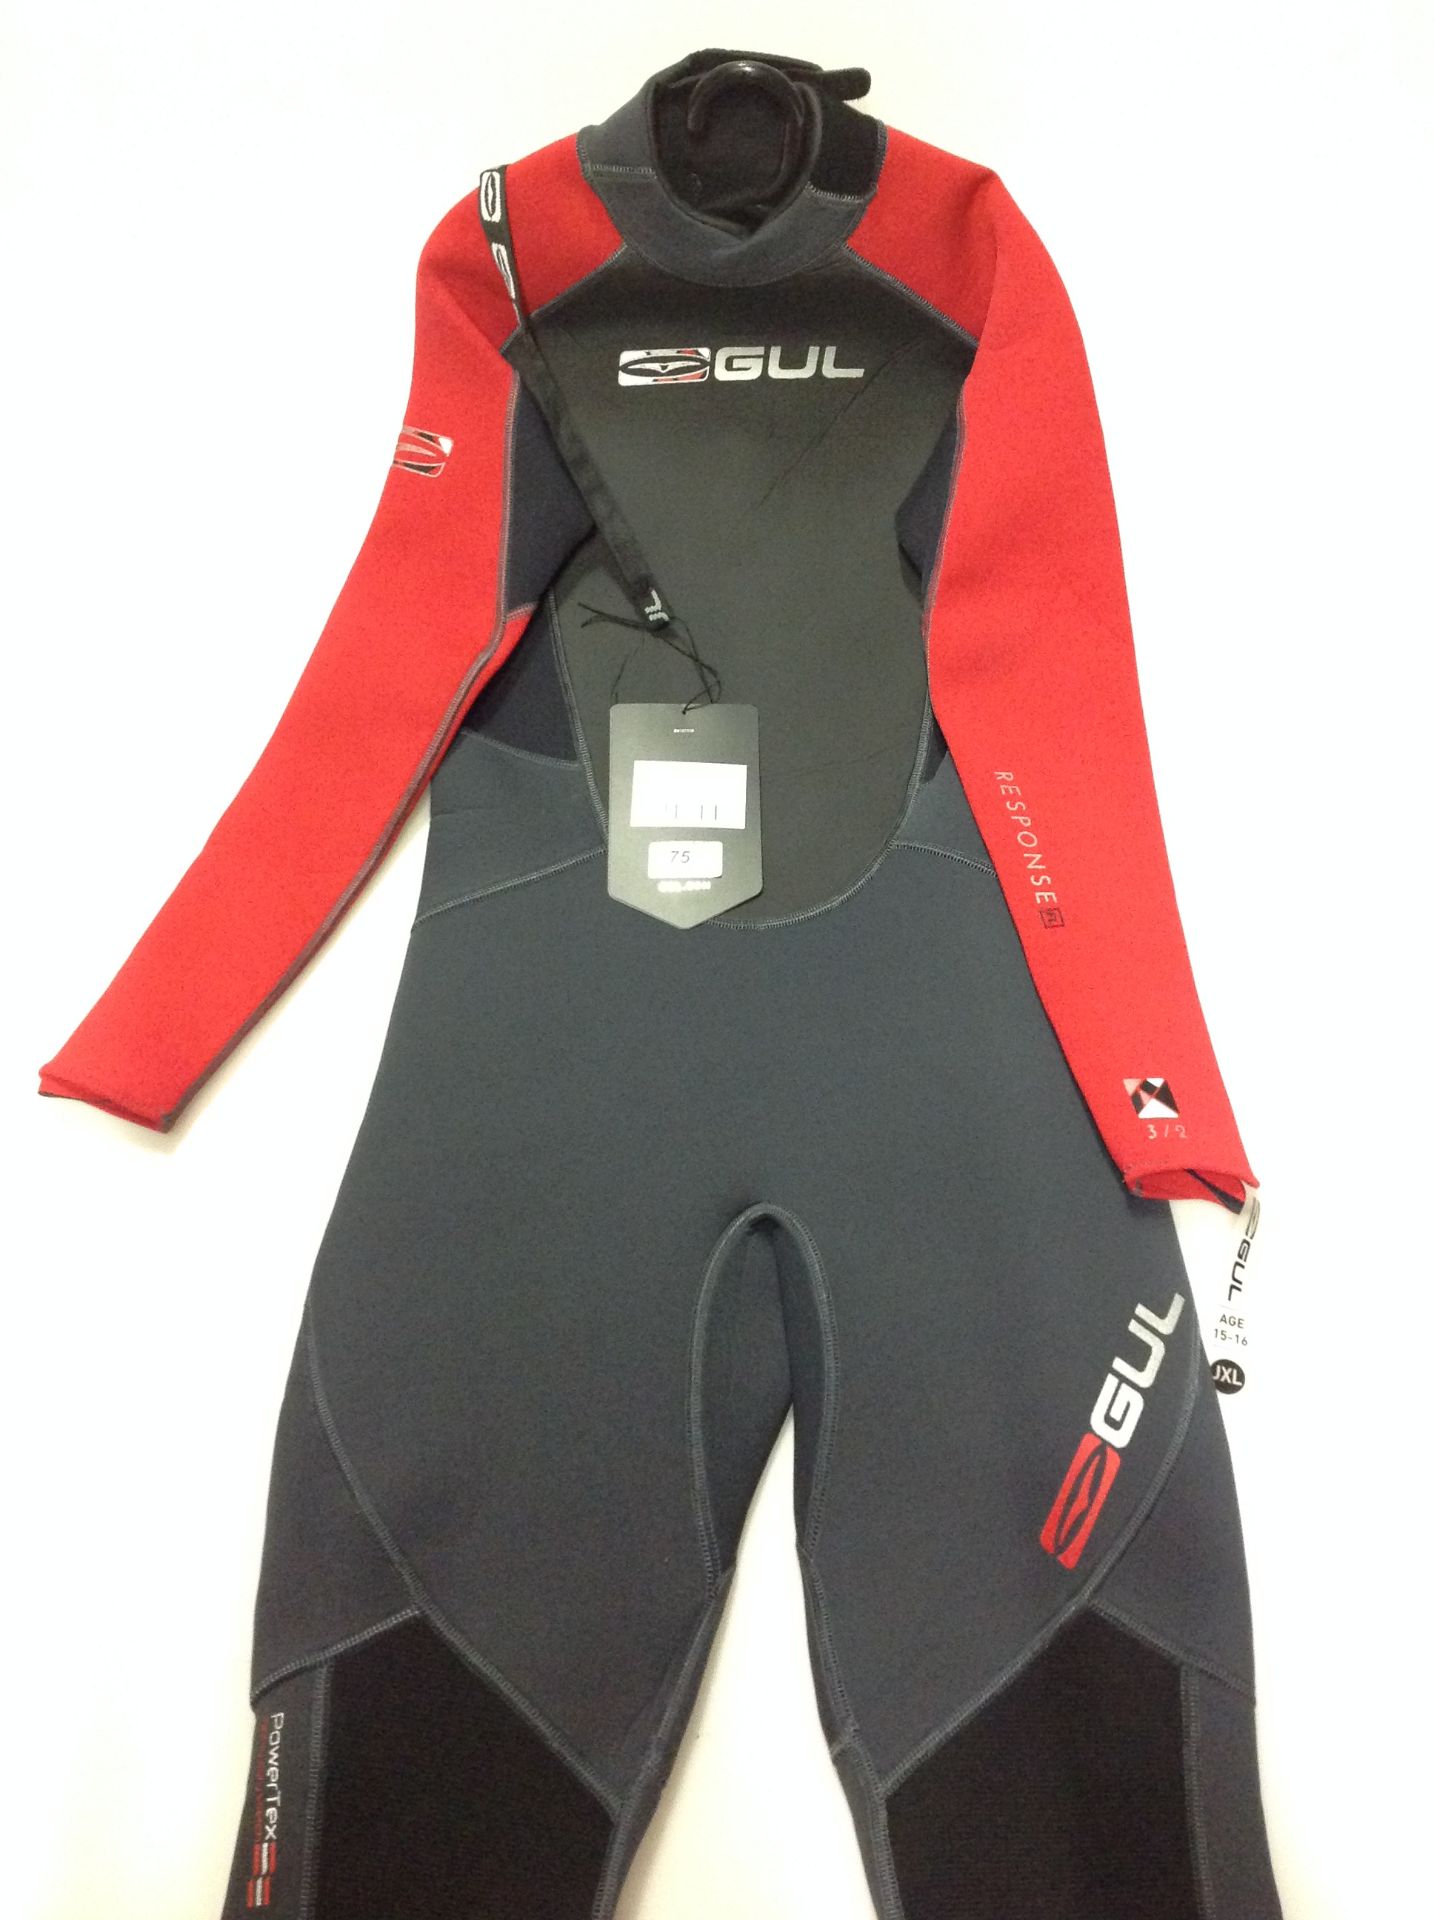 Gul Response 32 SDL FL wetsuit - size JXL